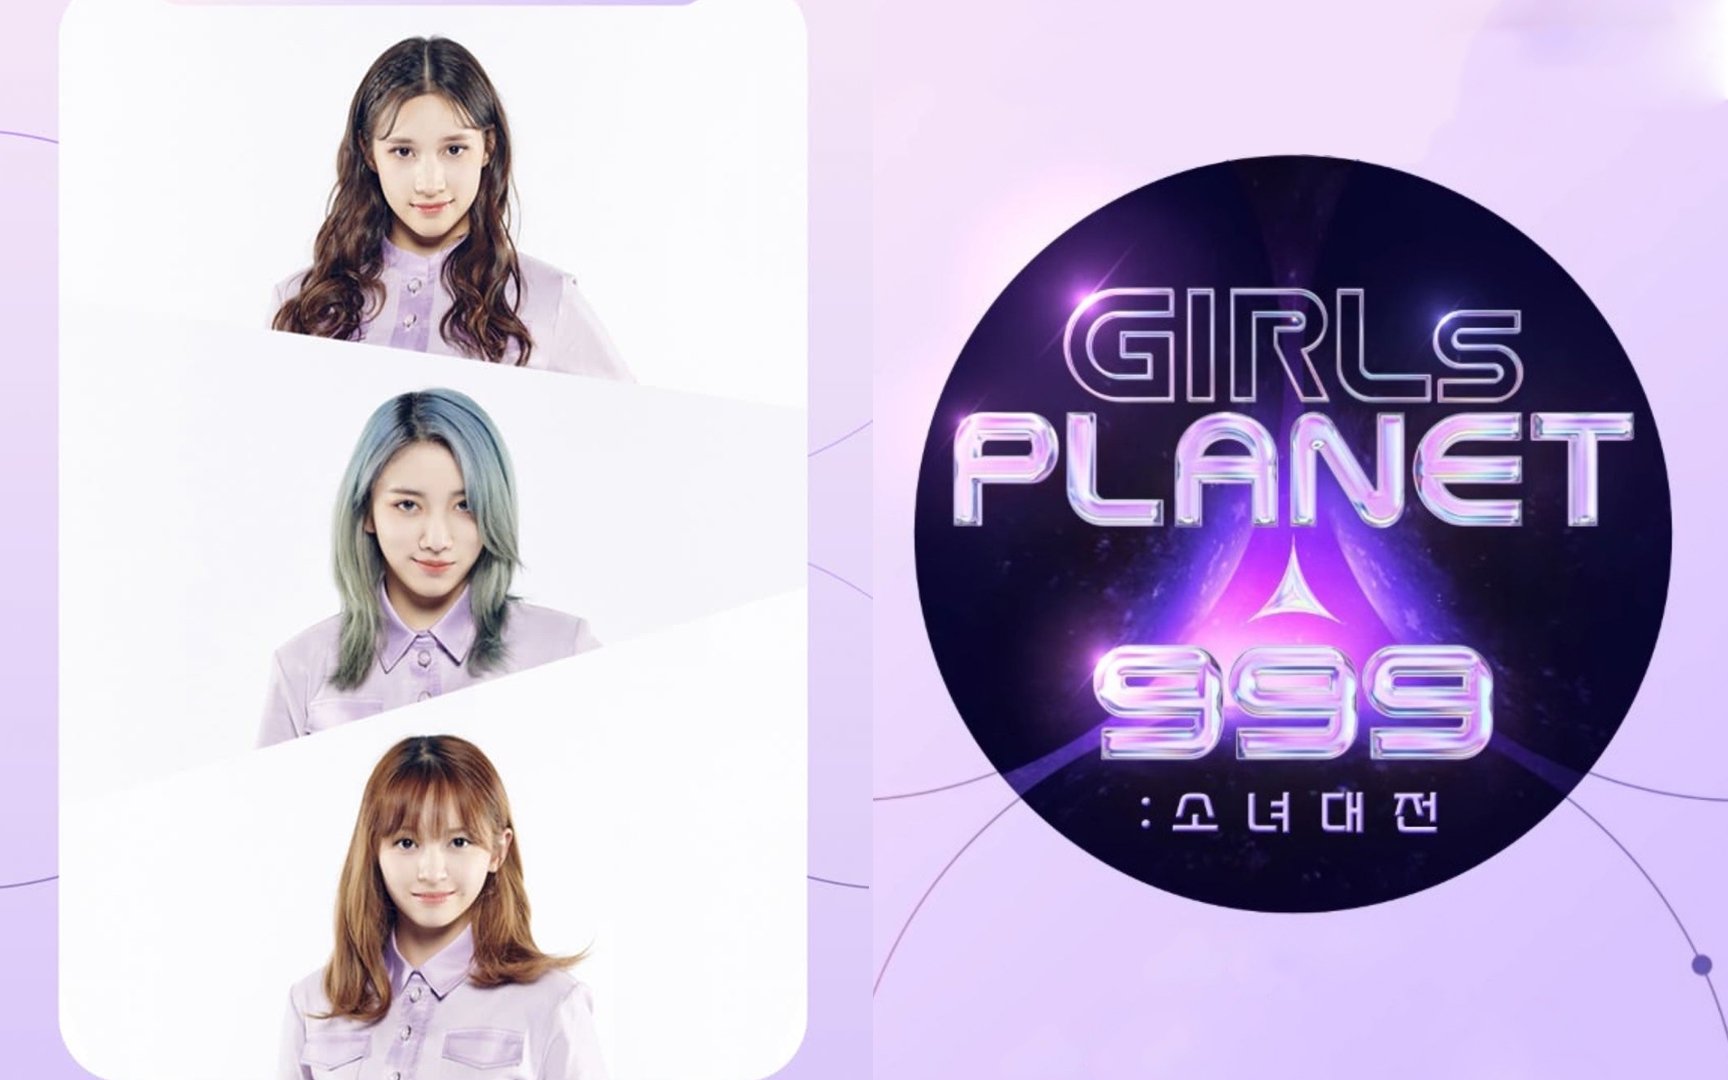 Girls planet 999 episode 1